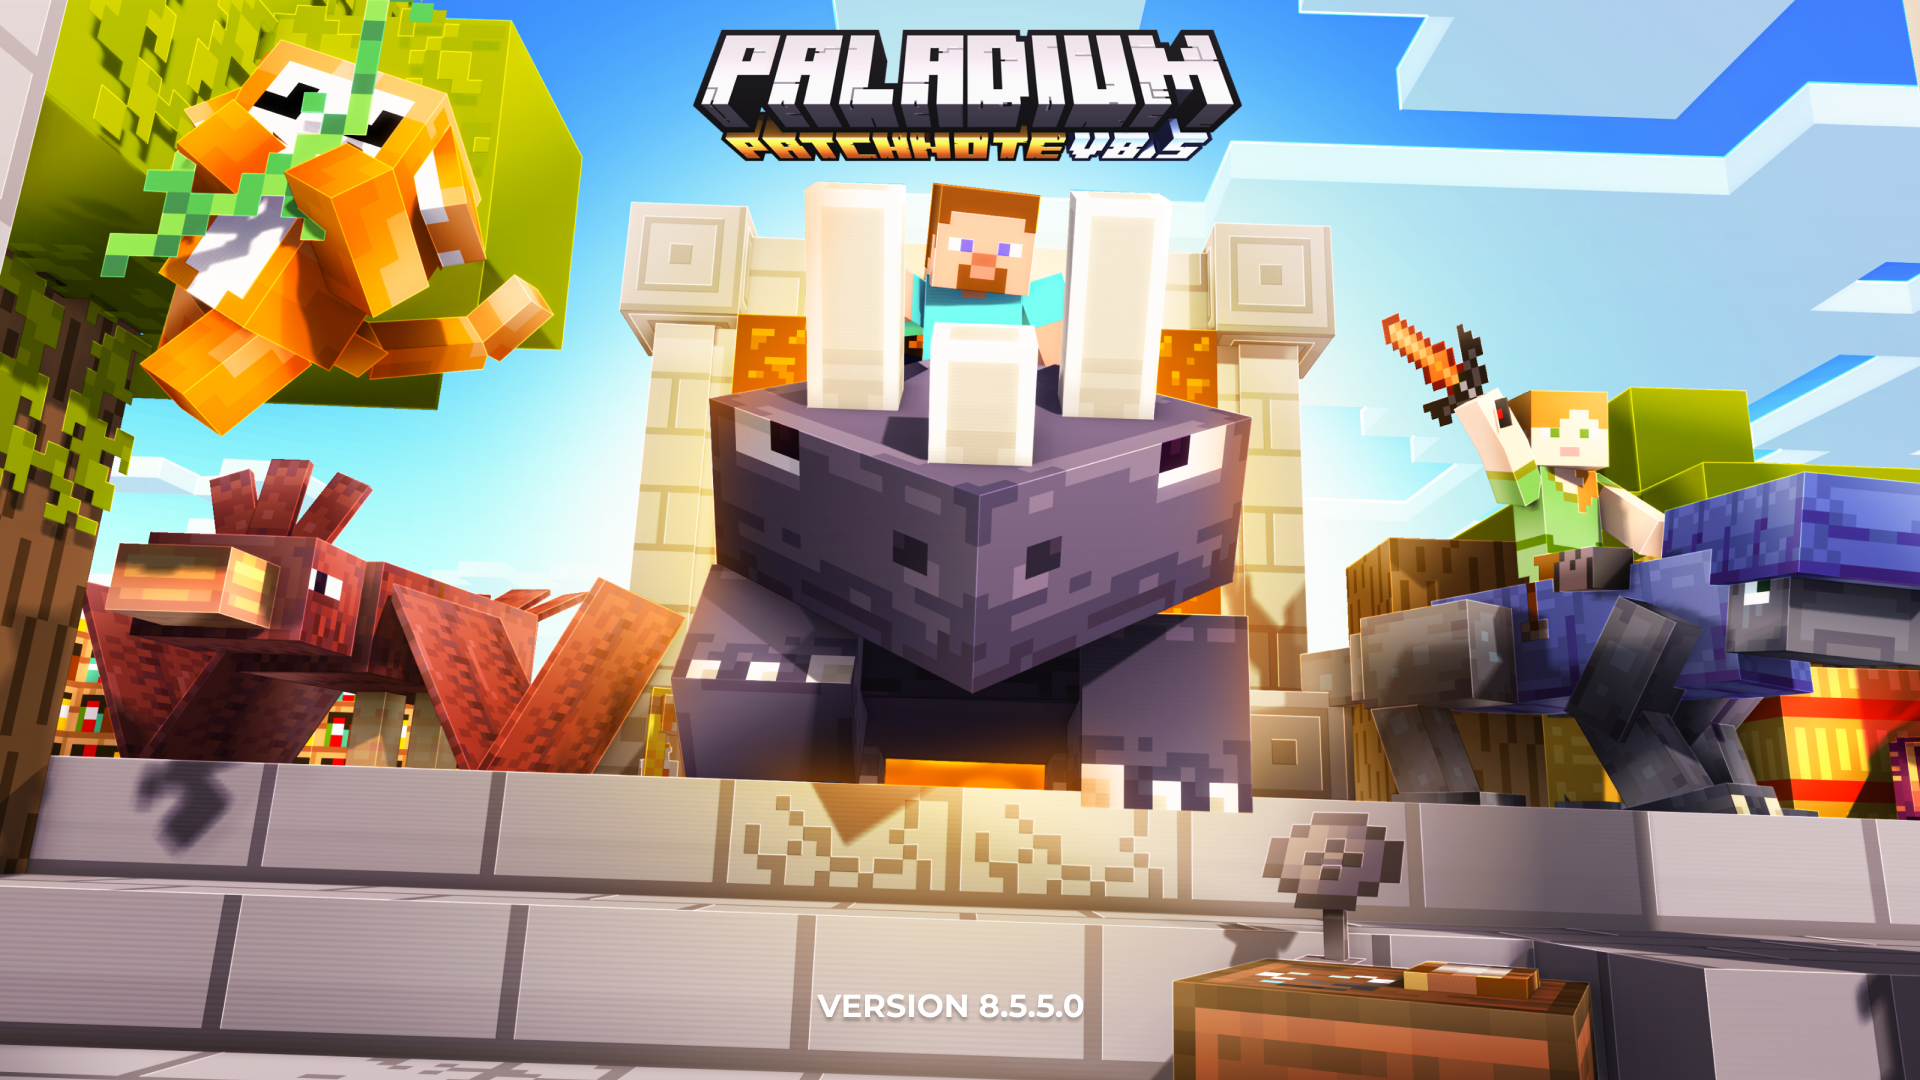 Paladium - PatchNote V8.5.5.0 | 22/02/2022